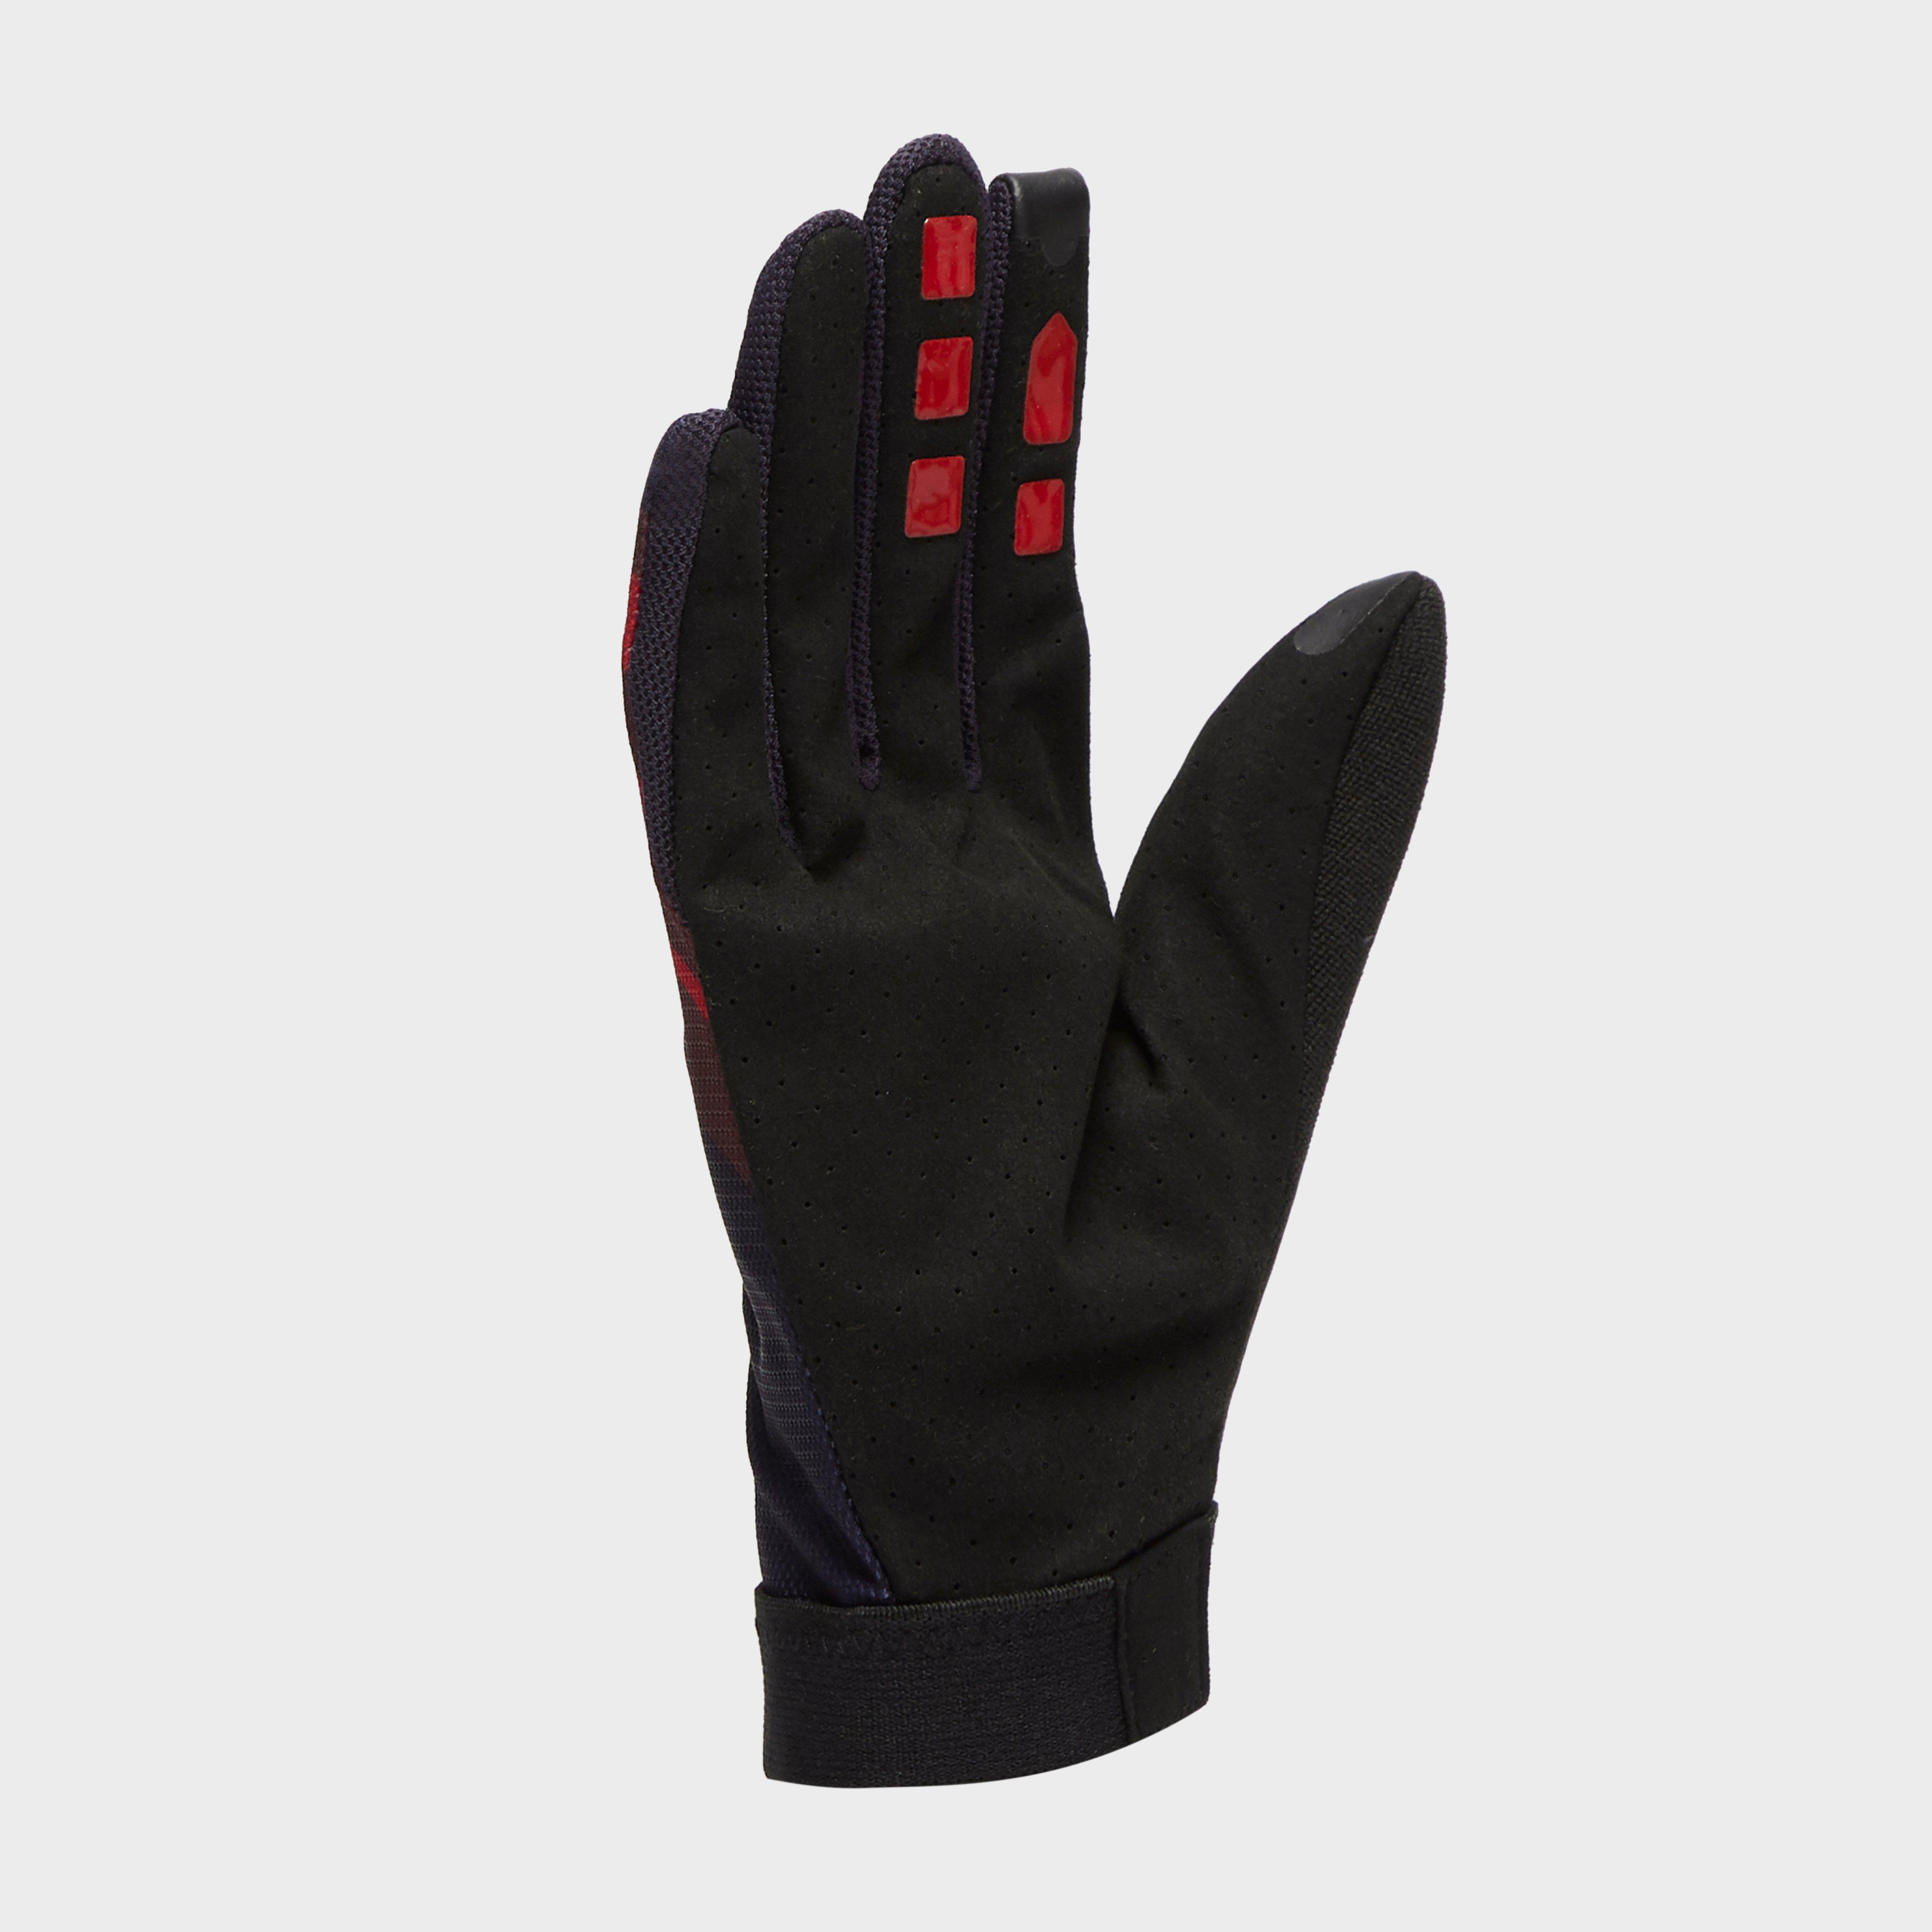 Sealskinz Solo Super Thin MTB Glove Review